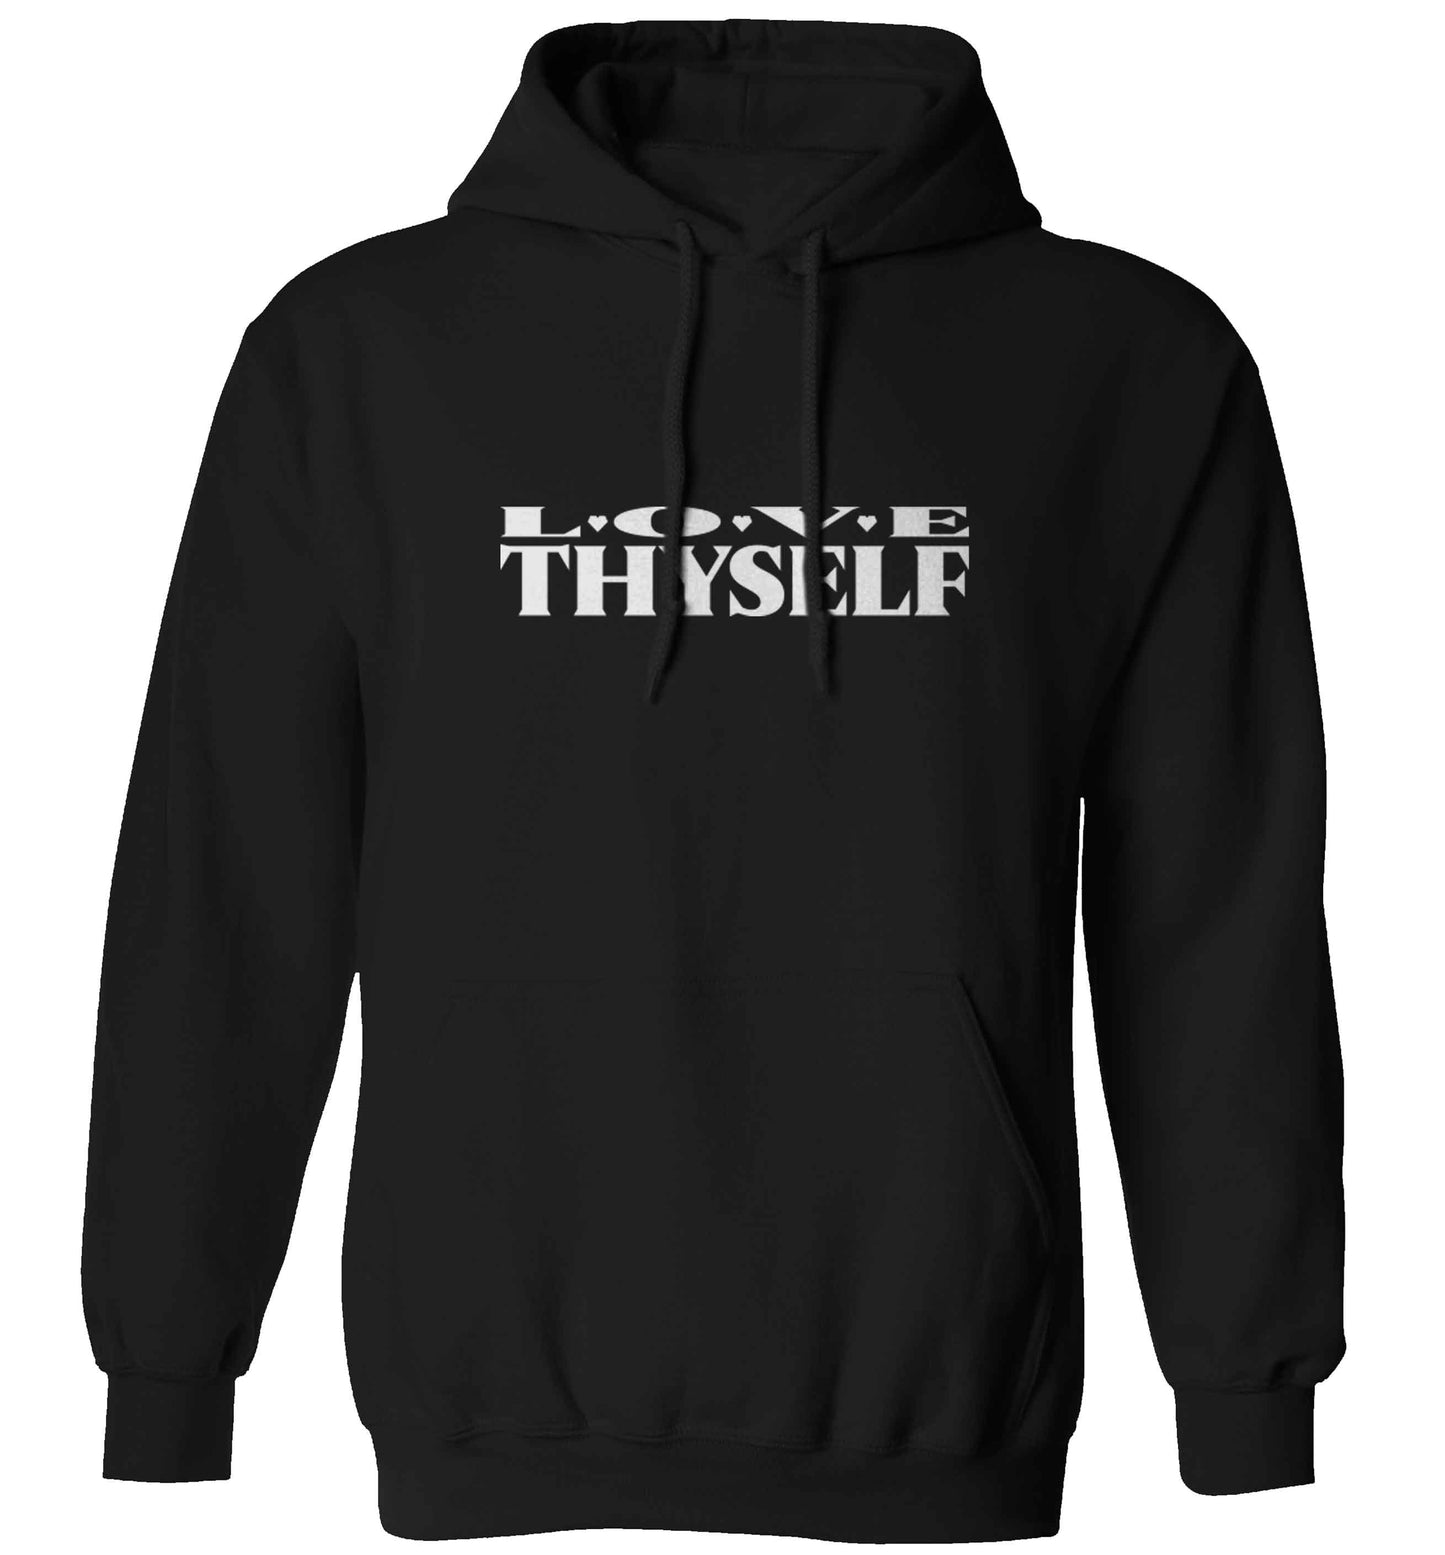 Love thyself adults unisex black hoodie 2XL